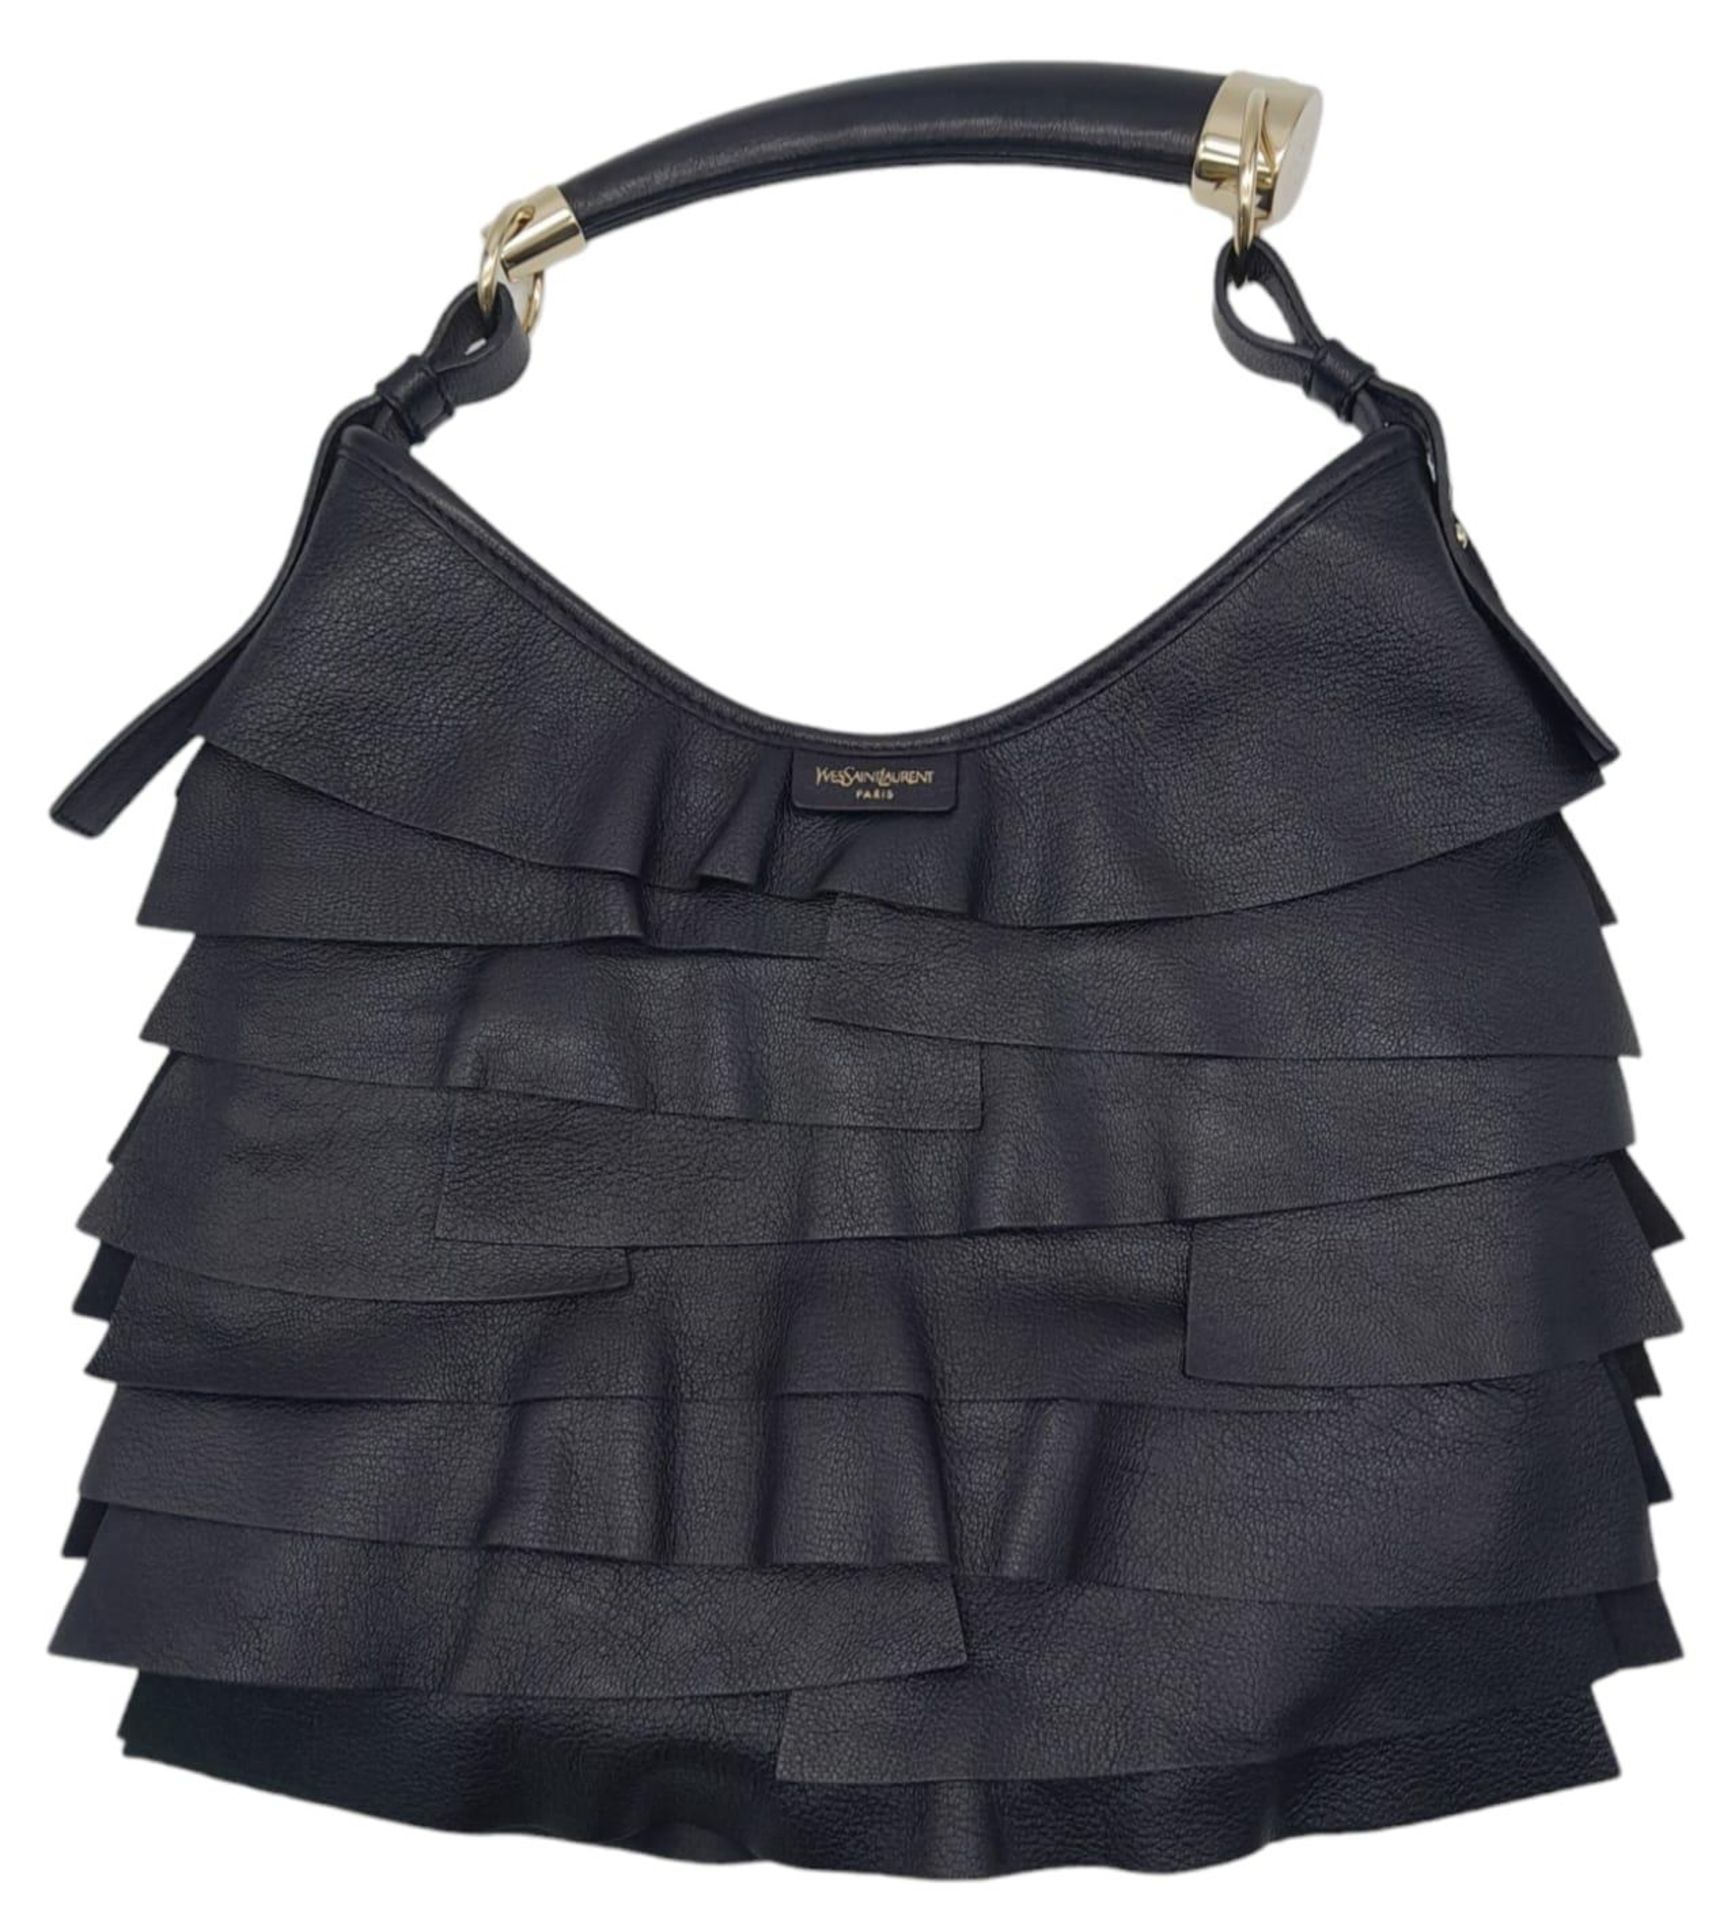 A YSL Saint-Tropez Handbag. Black leather strip exterior. Horn shaped handle. Textile interior